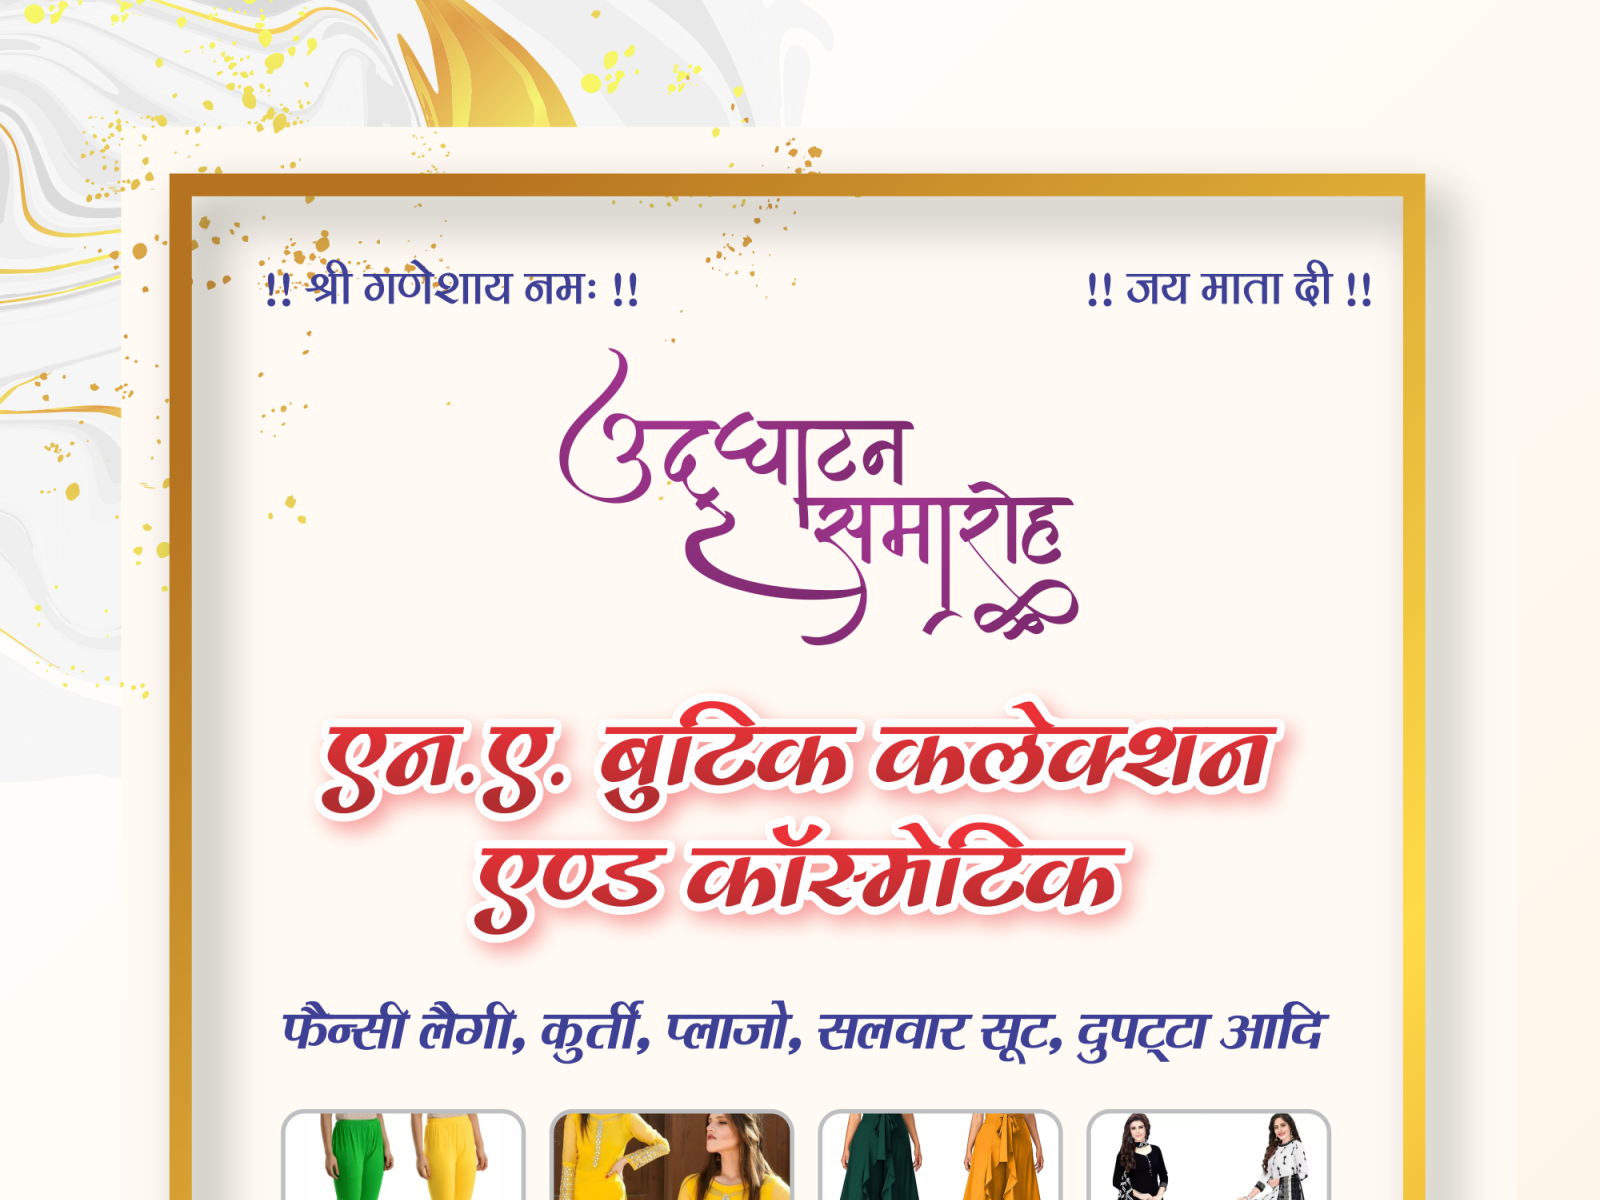 Hindi Invitation Card Design by Ibraheem Ansari on Dribbble